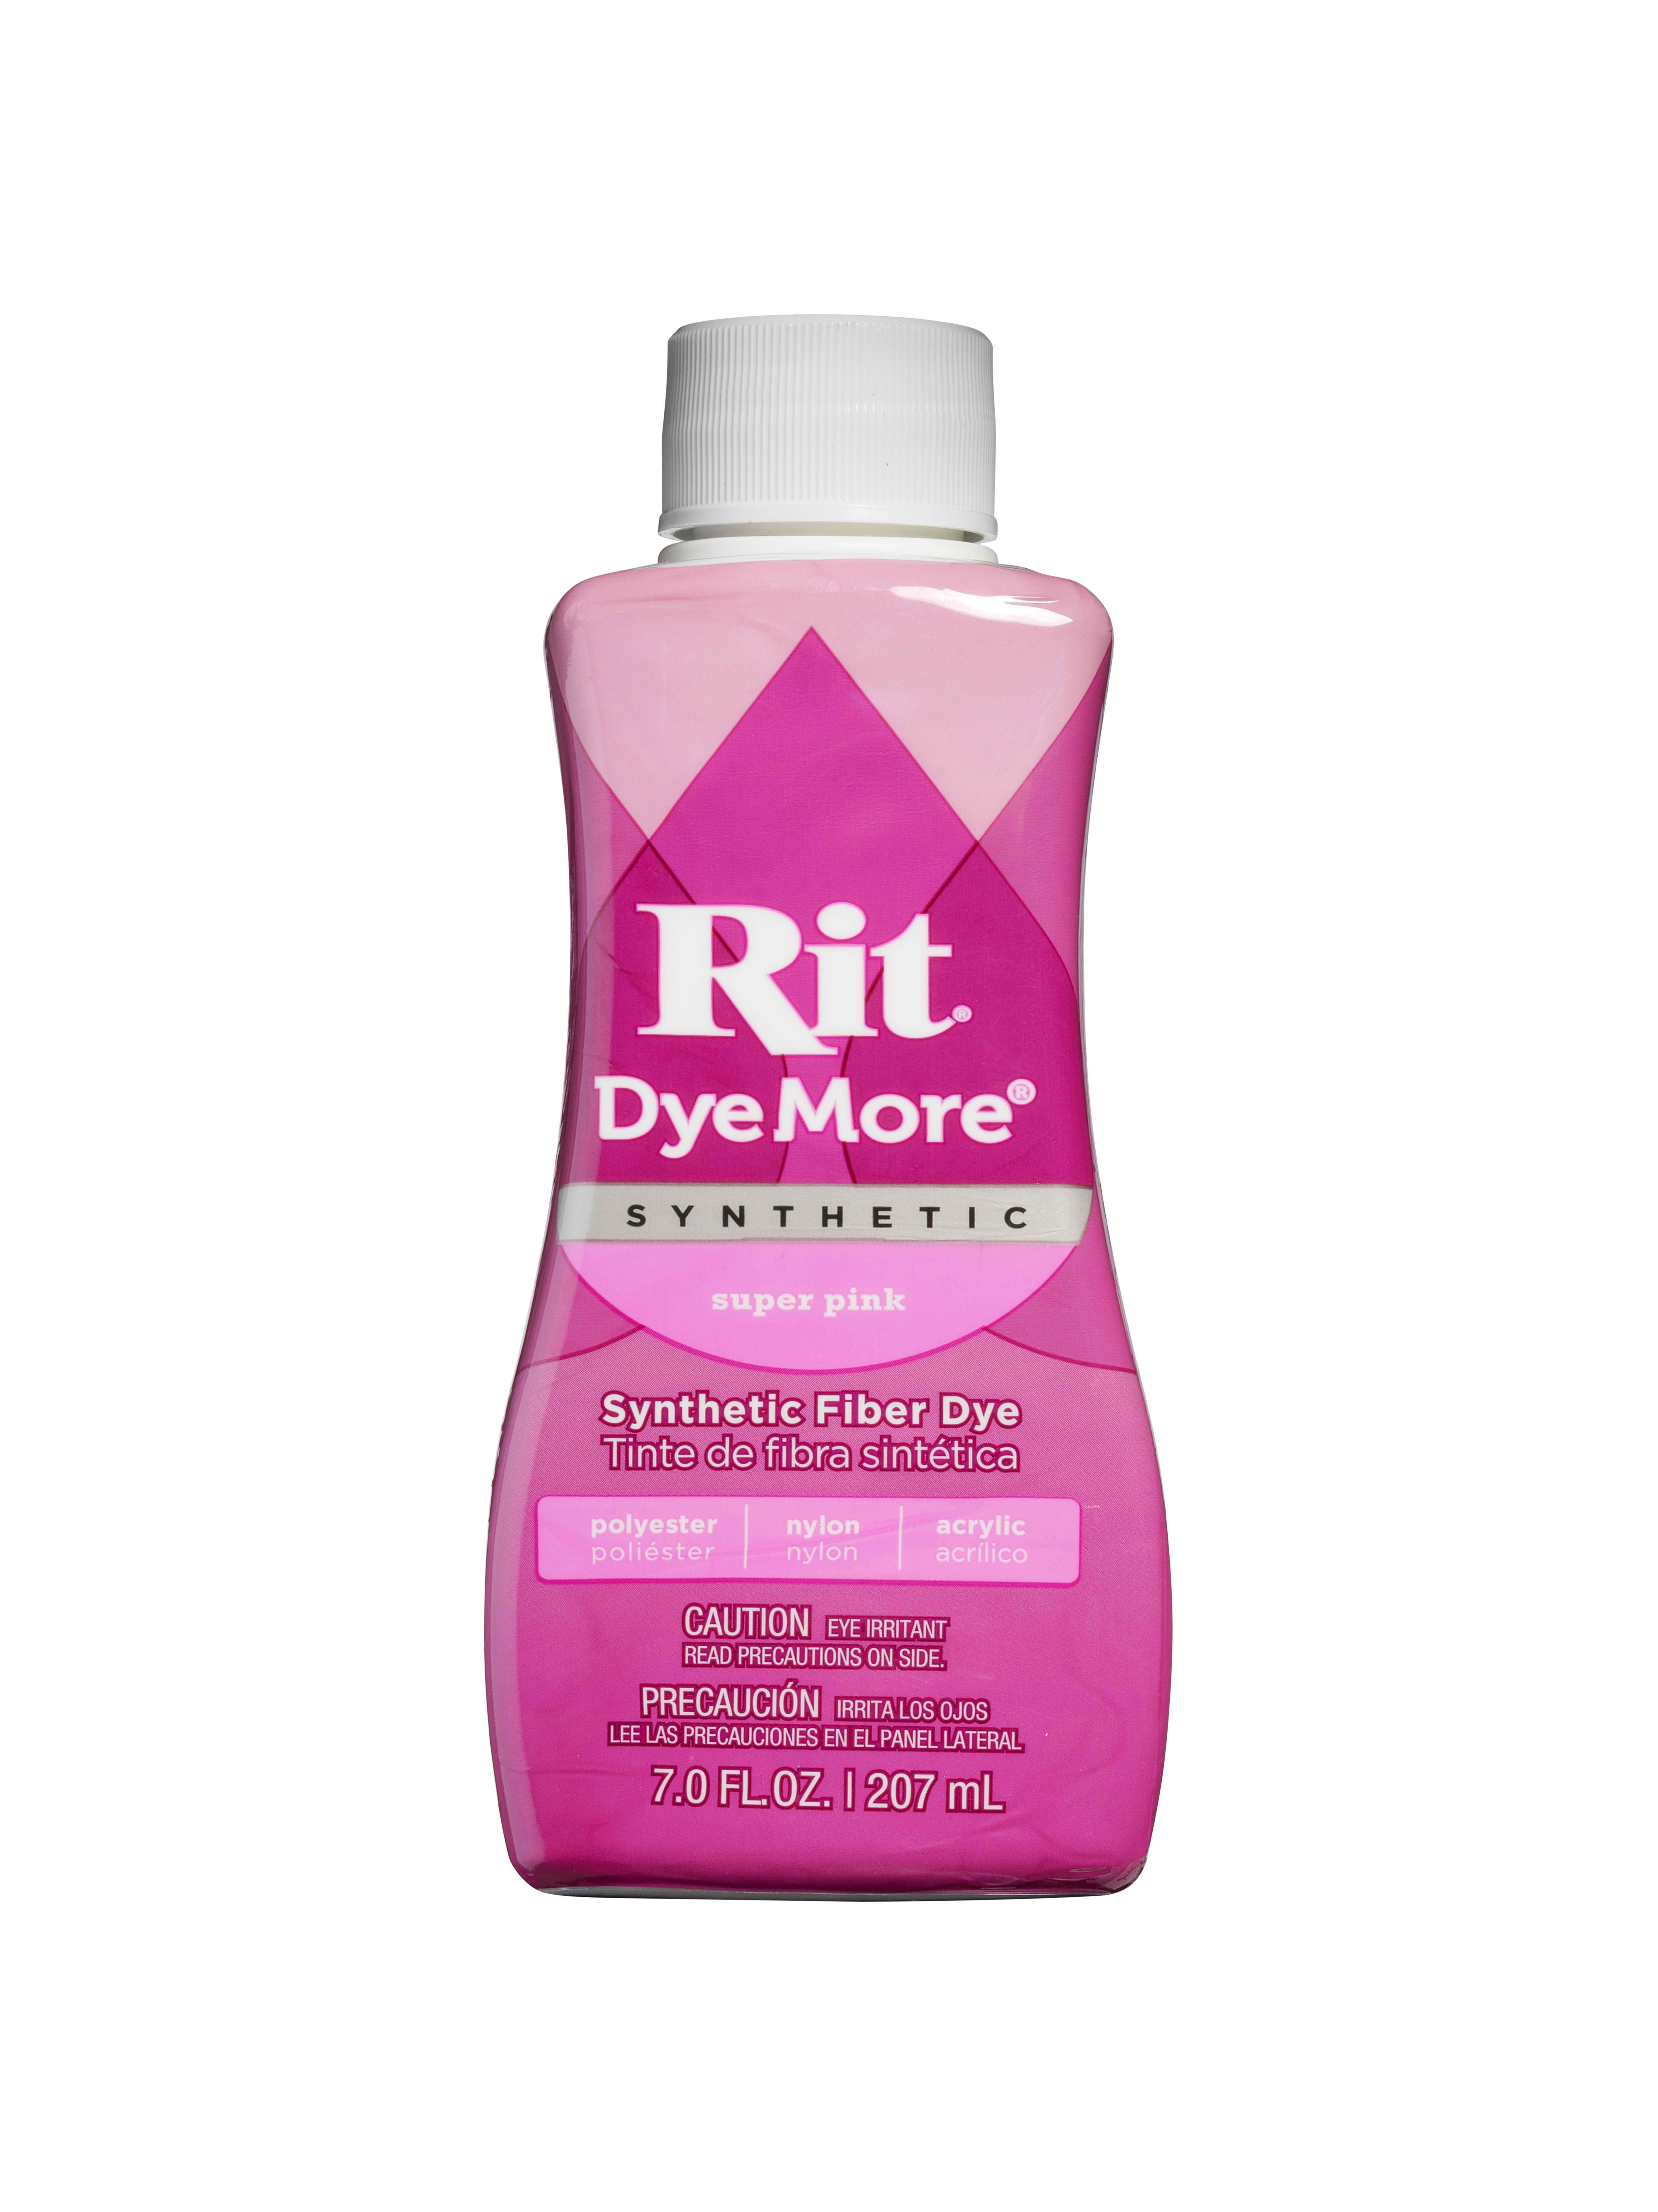 Rit DyeMore Synthetic Fiber Dye - Midnight Navy, 7 oz 